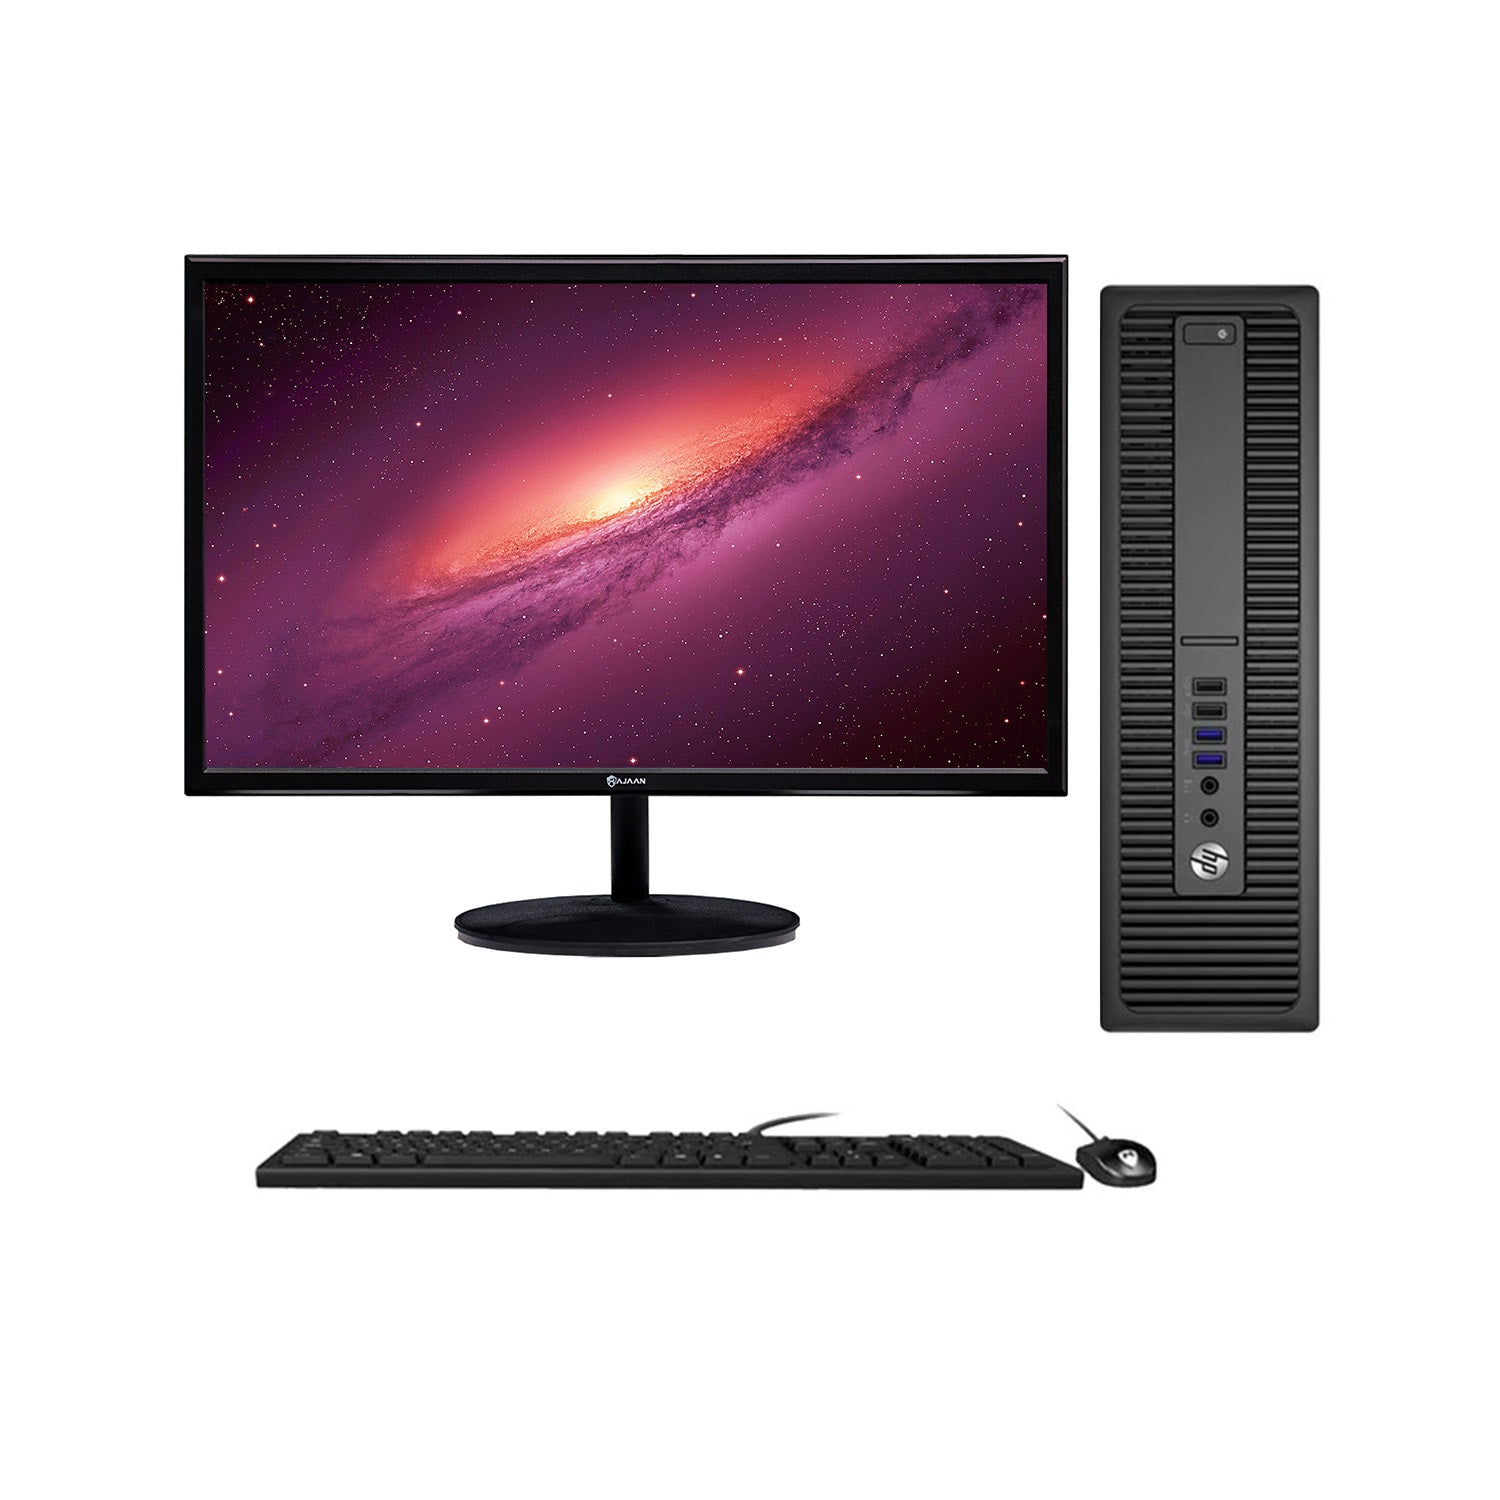 HP ProDesk SFF Desktop Computer with 22 inch Flat Screen Monitor - Intel Core i7-6700 Processor 3.40 GHz |8GB - 32GB DDR4 RAM| 256GB - 1TB SSD| Windows 10 Professional WIFI